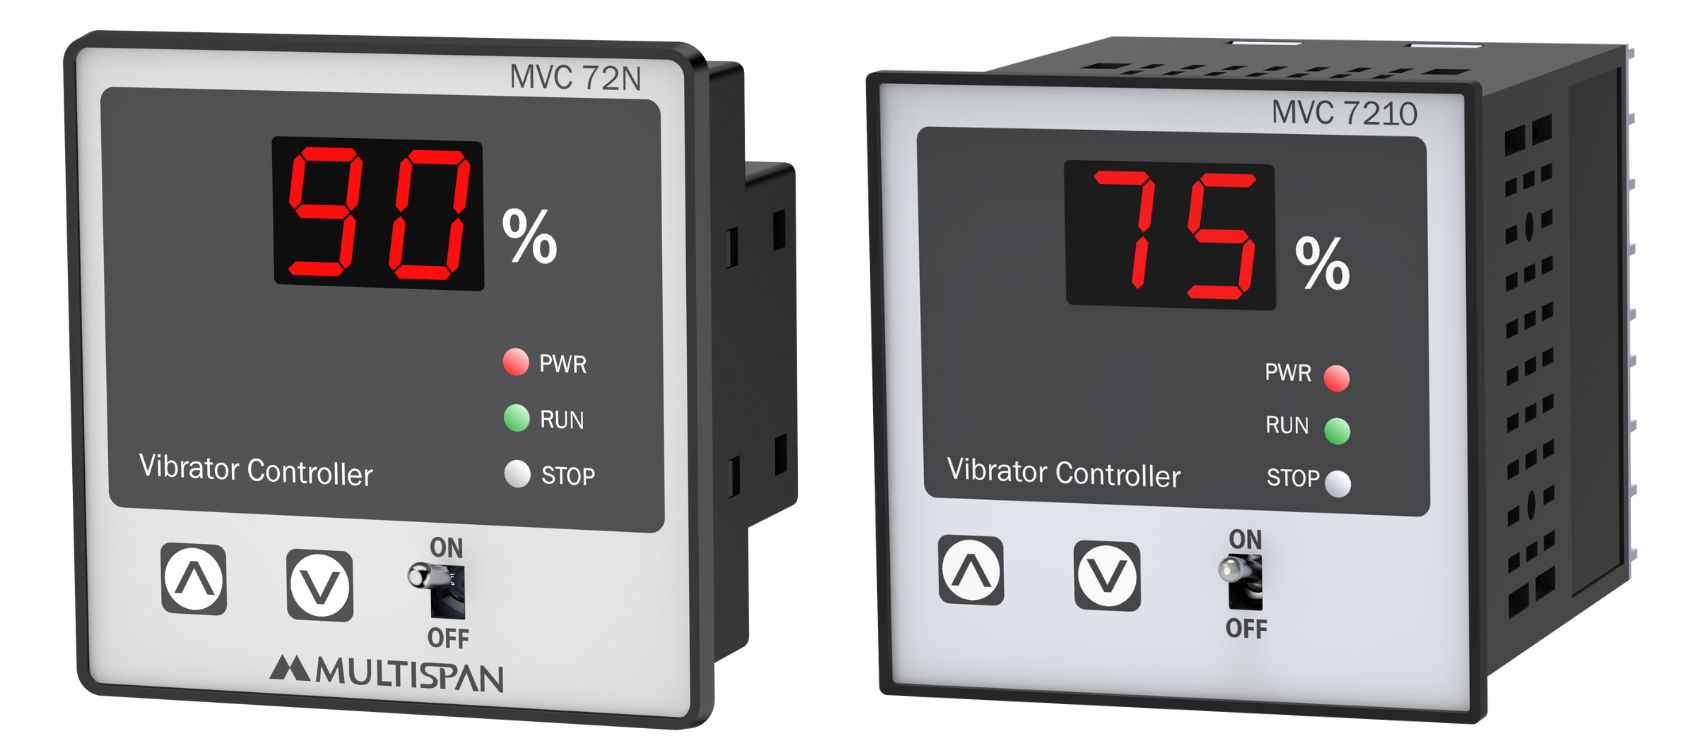 MVC-72N - Vibrator Controller - product image